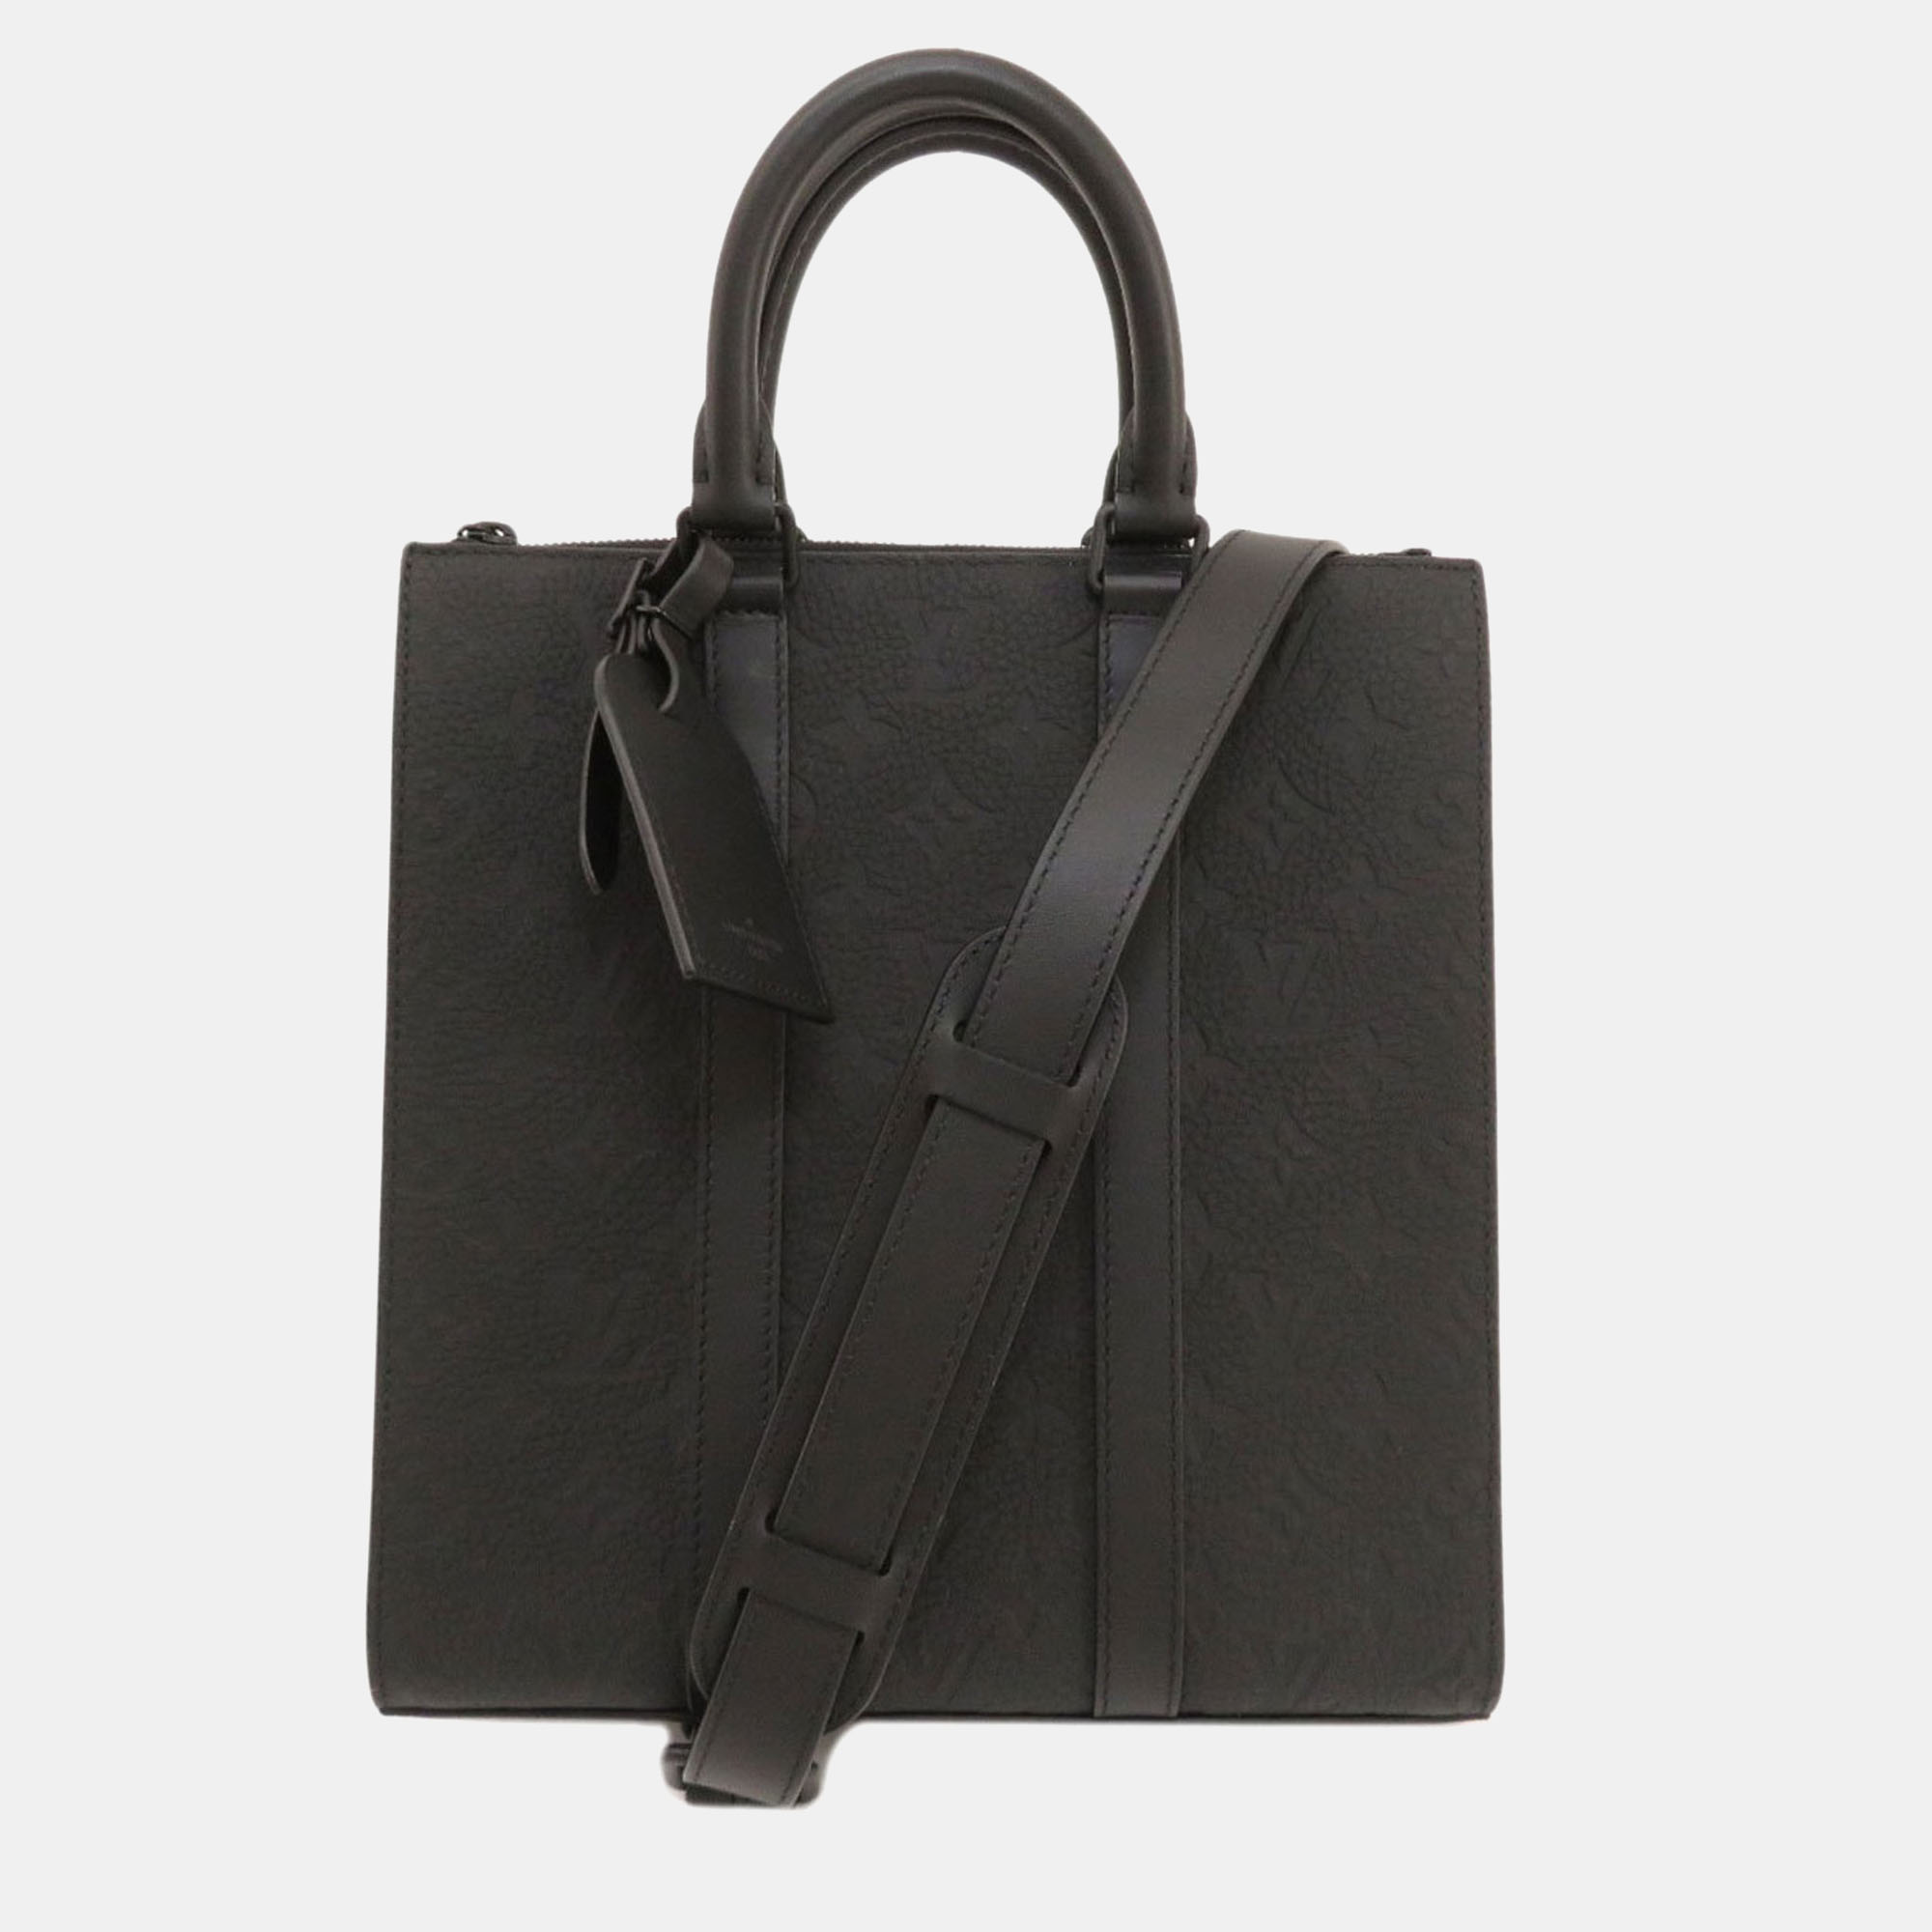 Louis vuitton black taurillon leather sac plat tote bag